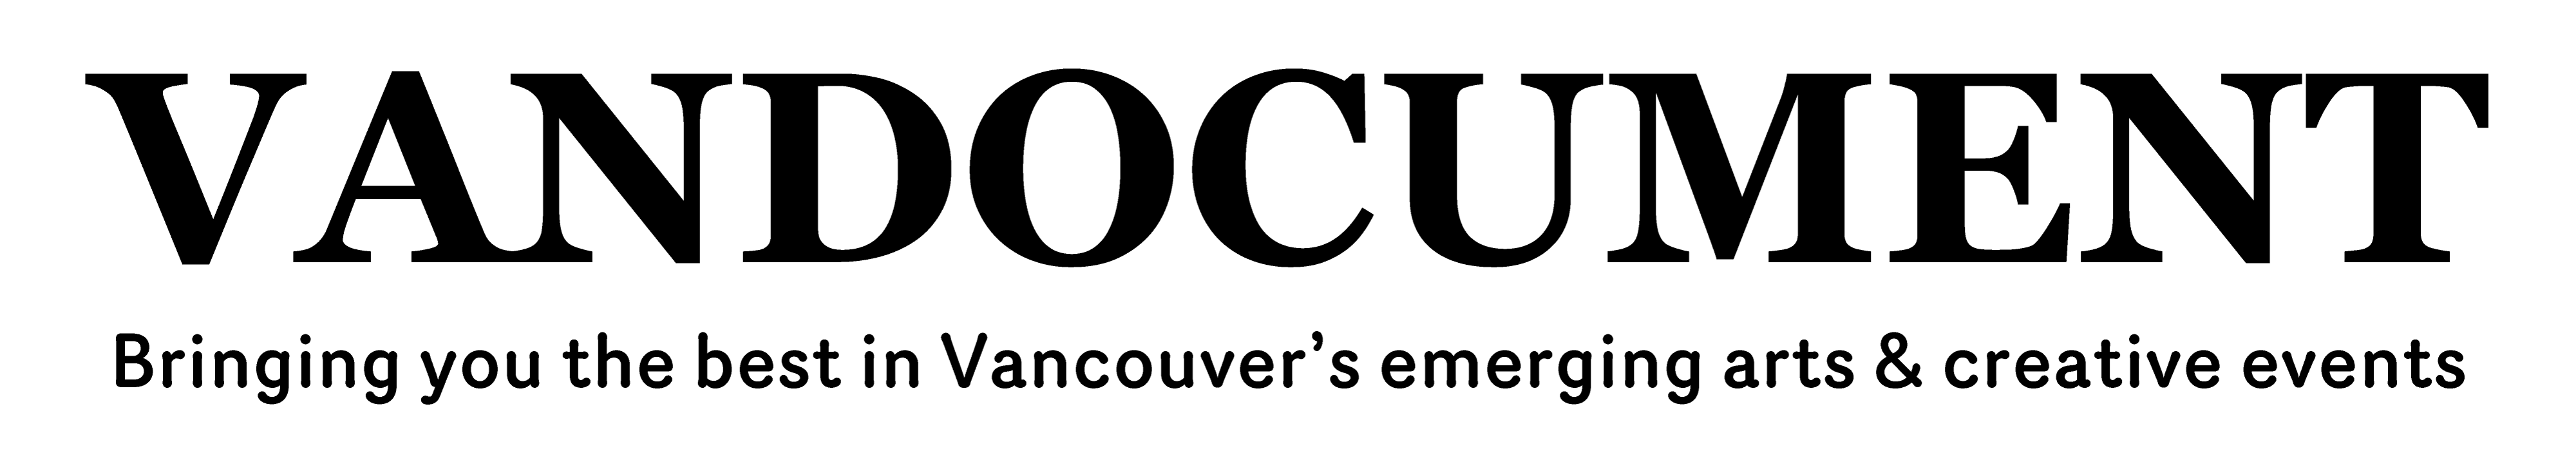 VANDOC_logo_July2015_blk